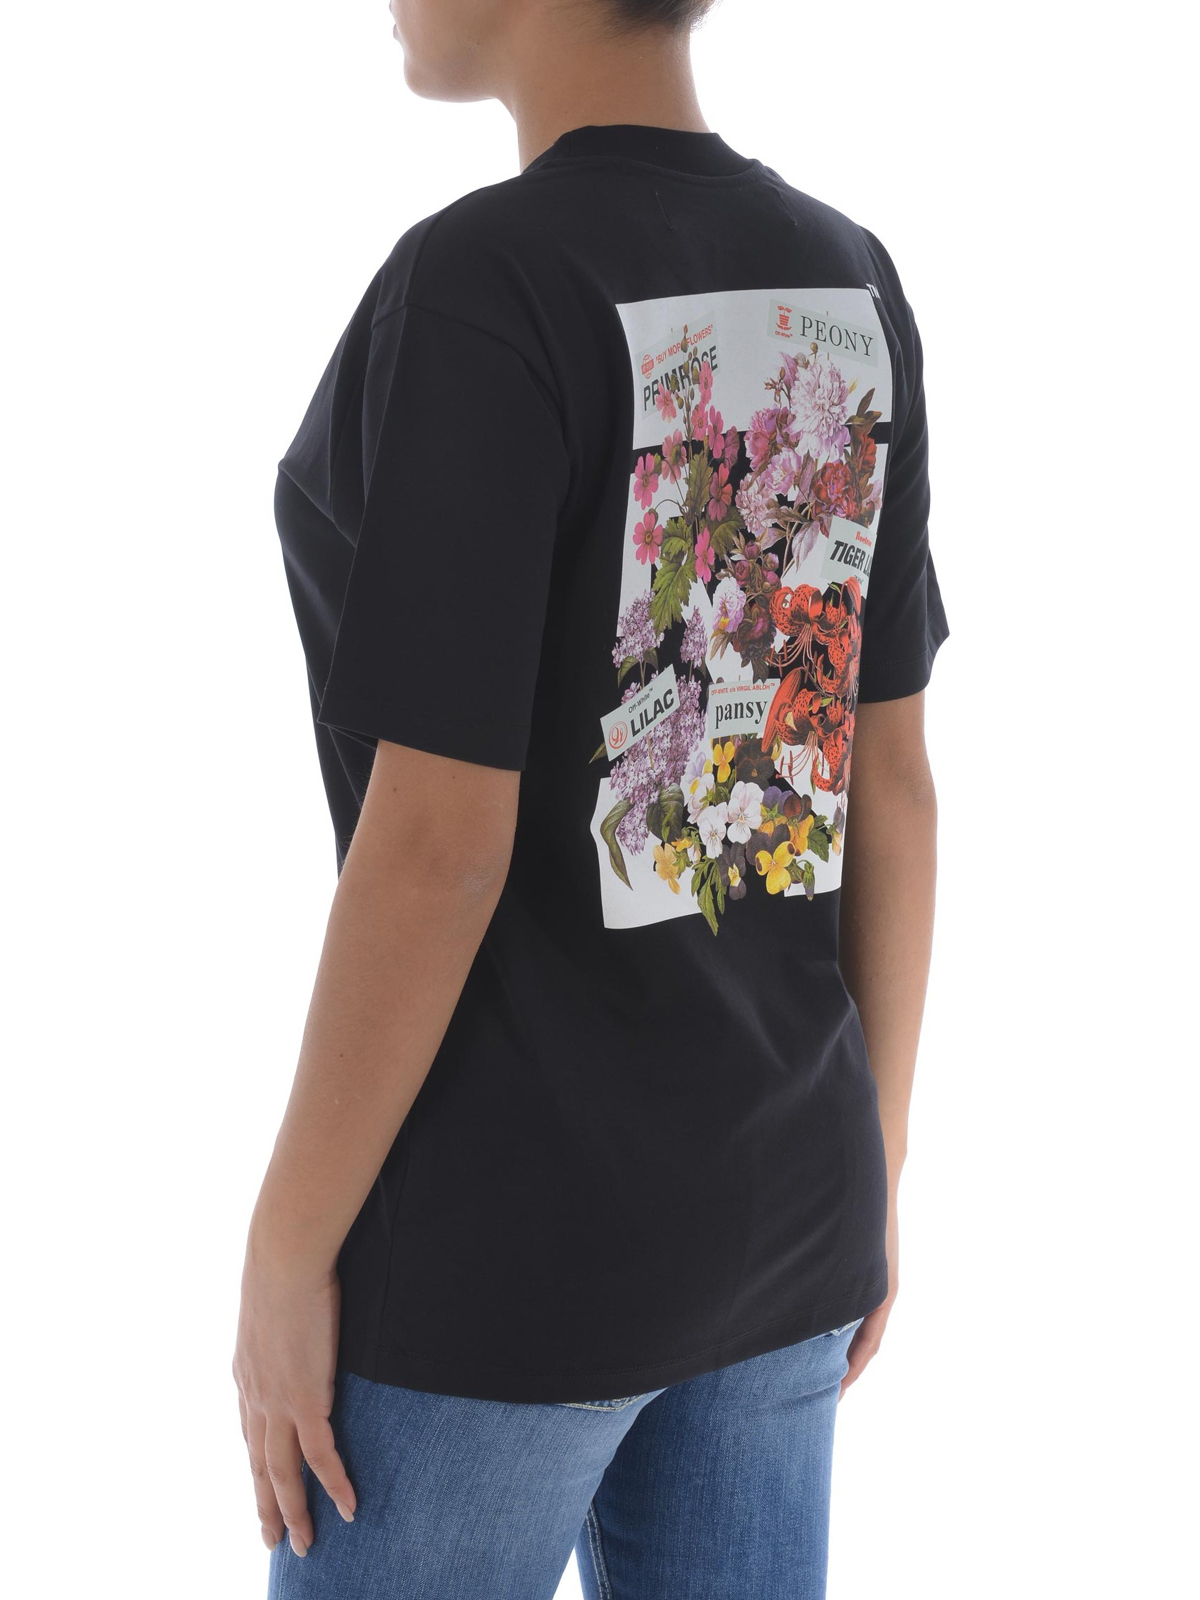 T-shirts Off-White - Flower Shop back print black Tee